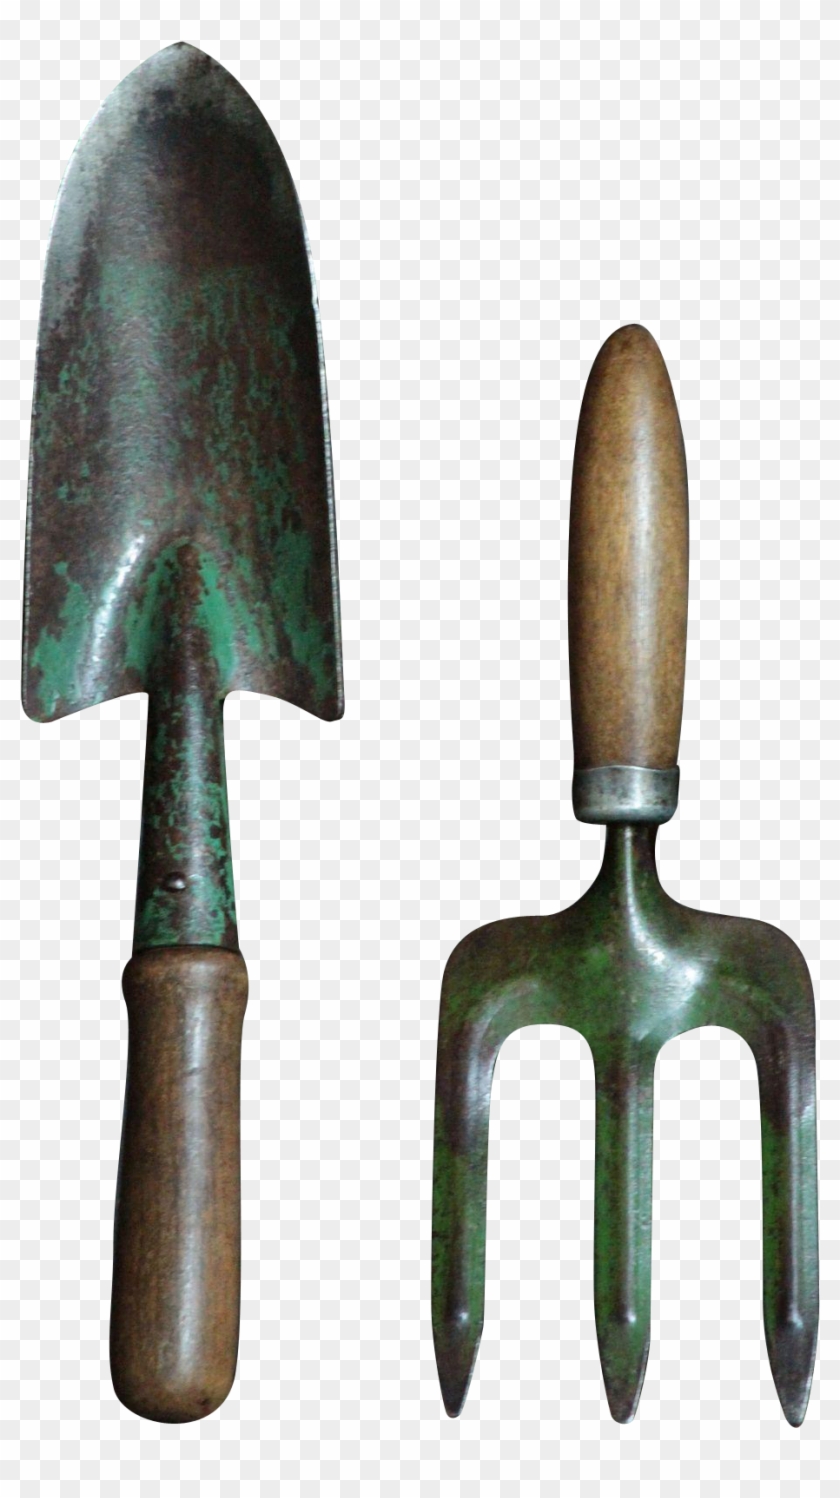 Vintage English Garden Tools - Garden Trowel And Fork Clipart #3985875